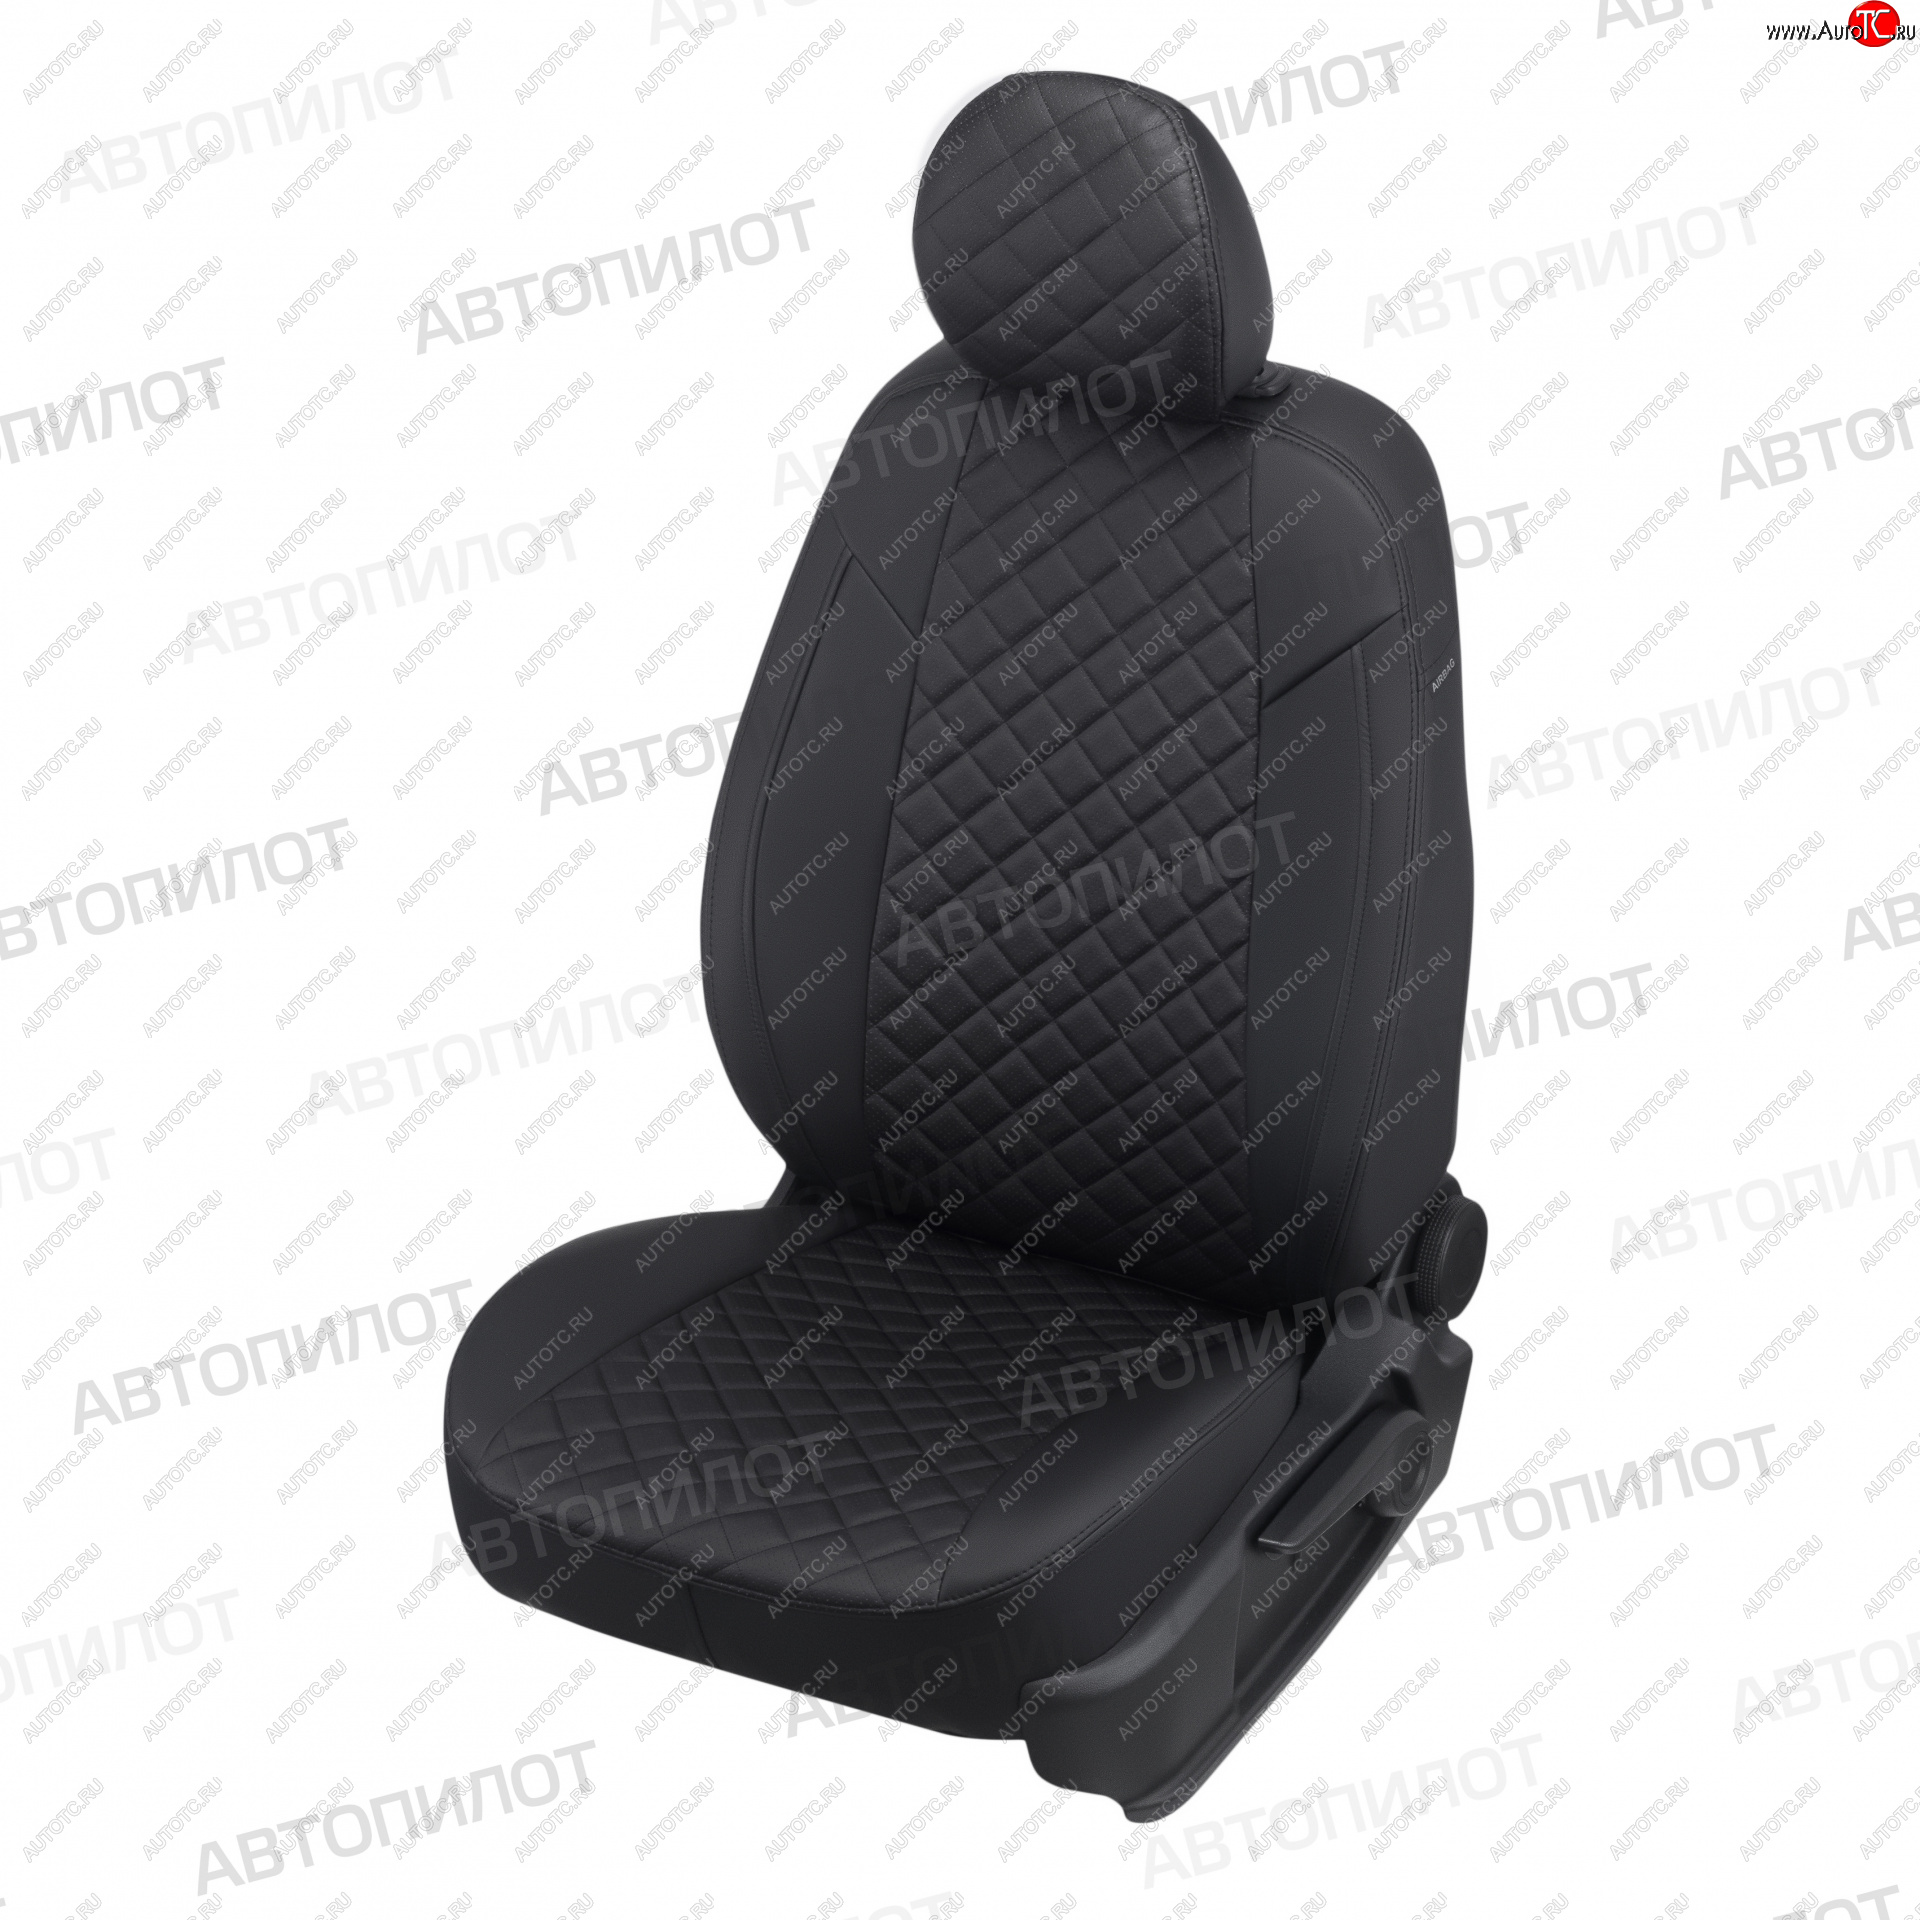 7 799 р. Чехлы сидений (экокожа) Автопилот Ромб  KIA Rio  2 JB (2005-2011) (черный)